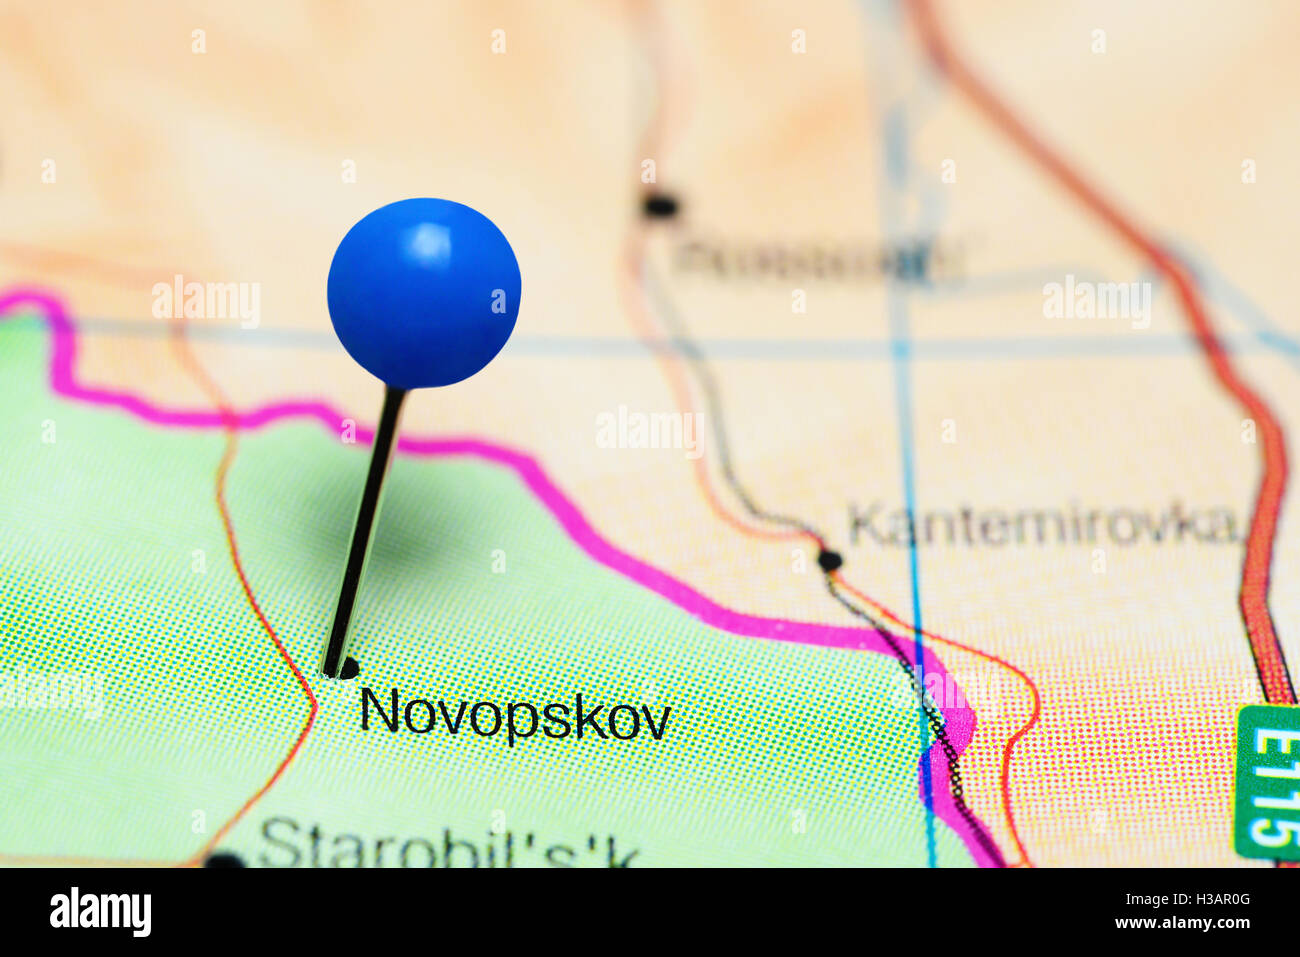 Novopskov pinned on a map of Ukraine Stock Photo